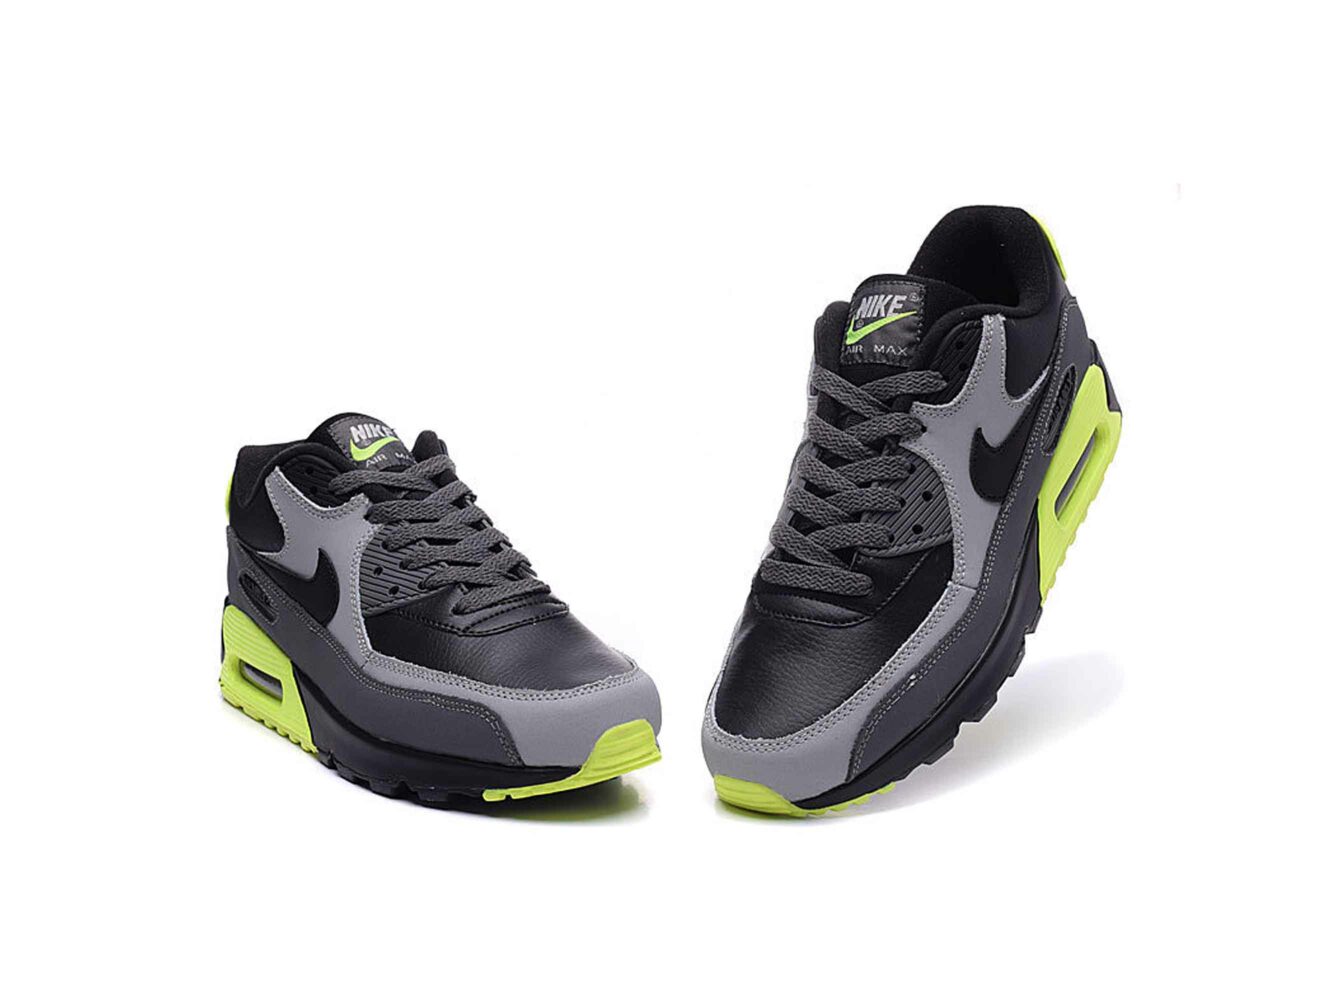 Nike Air Max 90 Neon Купить